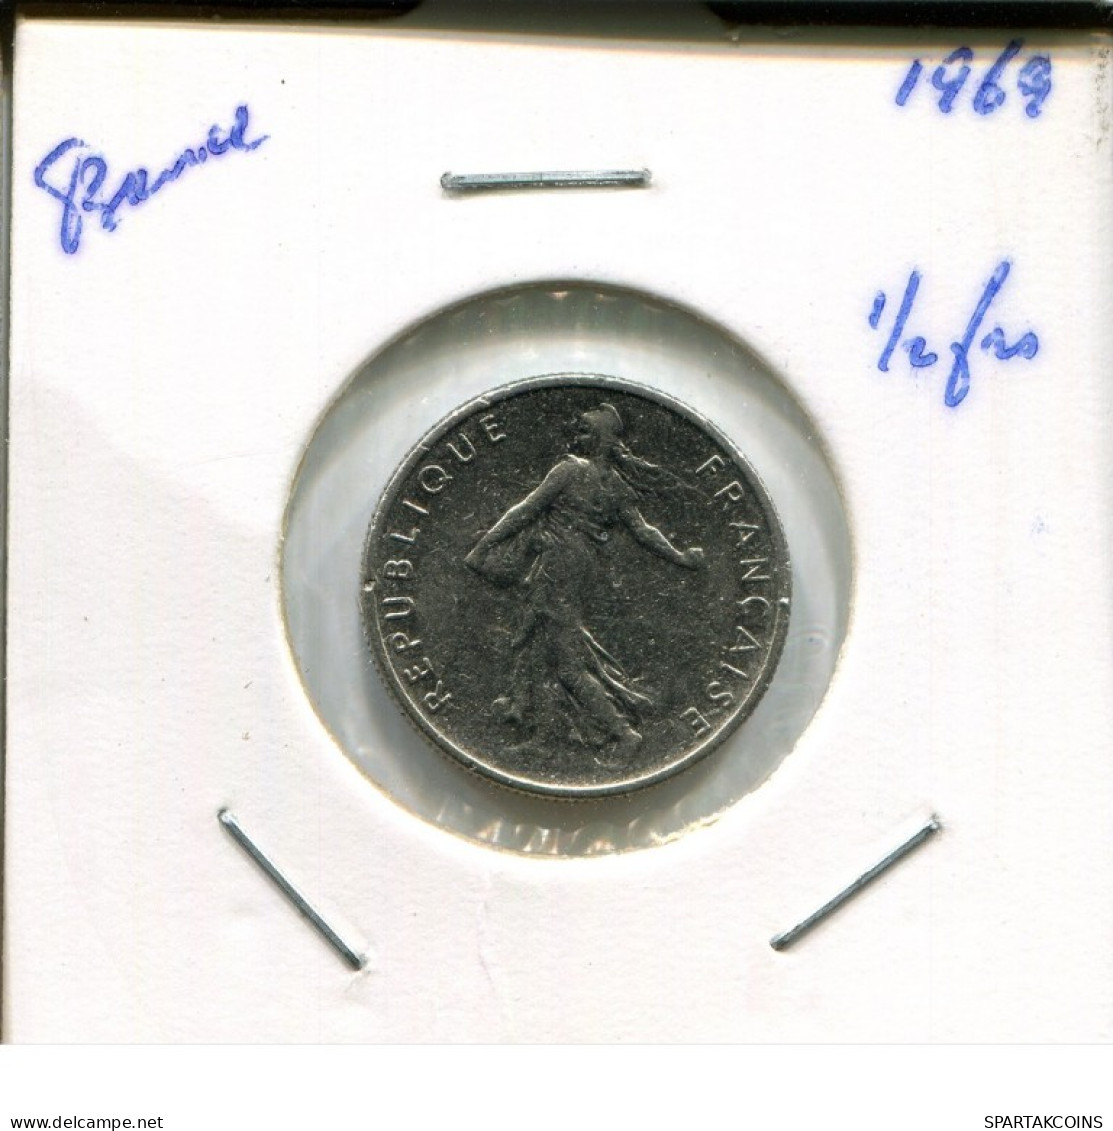 1/2 FRANC 1969 FRANCIA FRANCE Moneda #AN911.E.A - 1/2 Franc